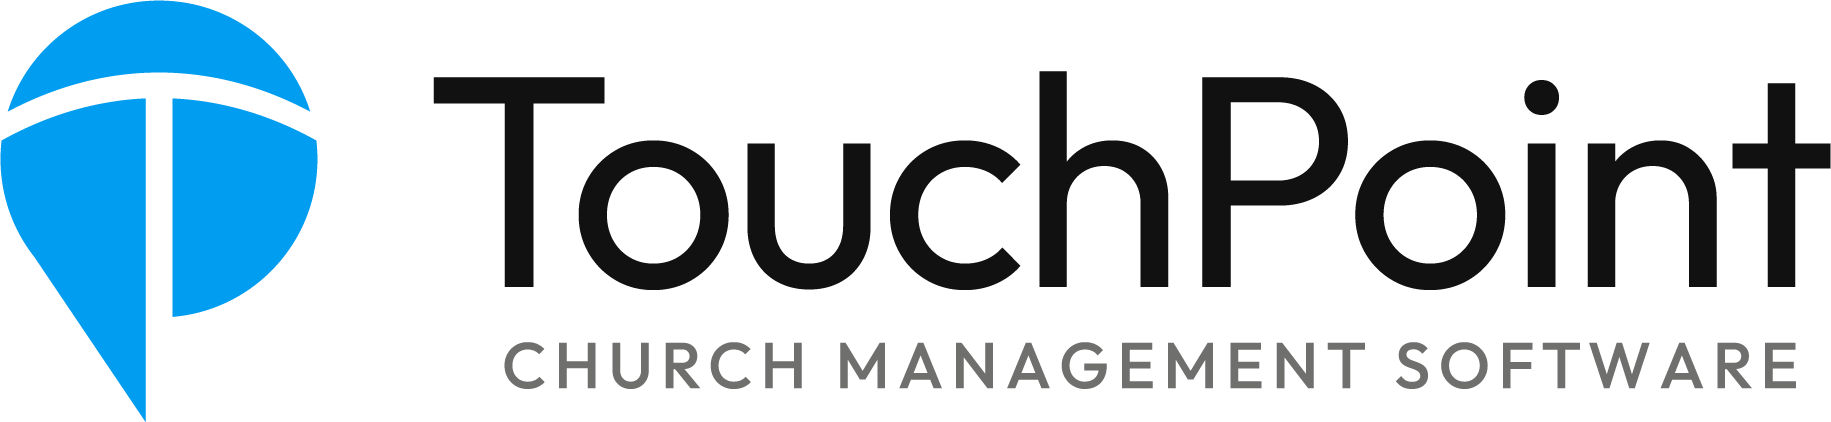 TouchPoint Church Management Software Logo